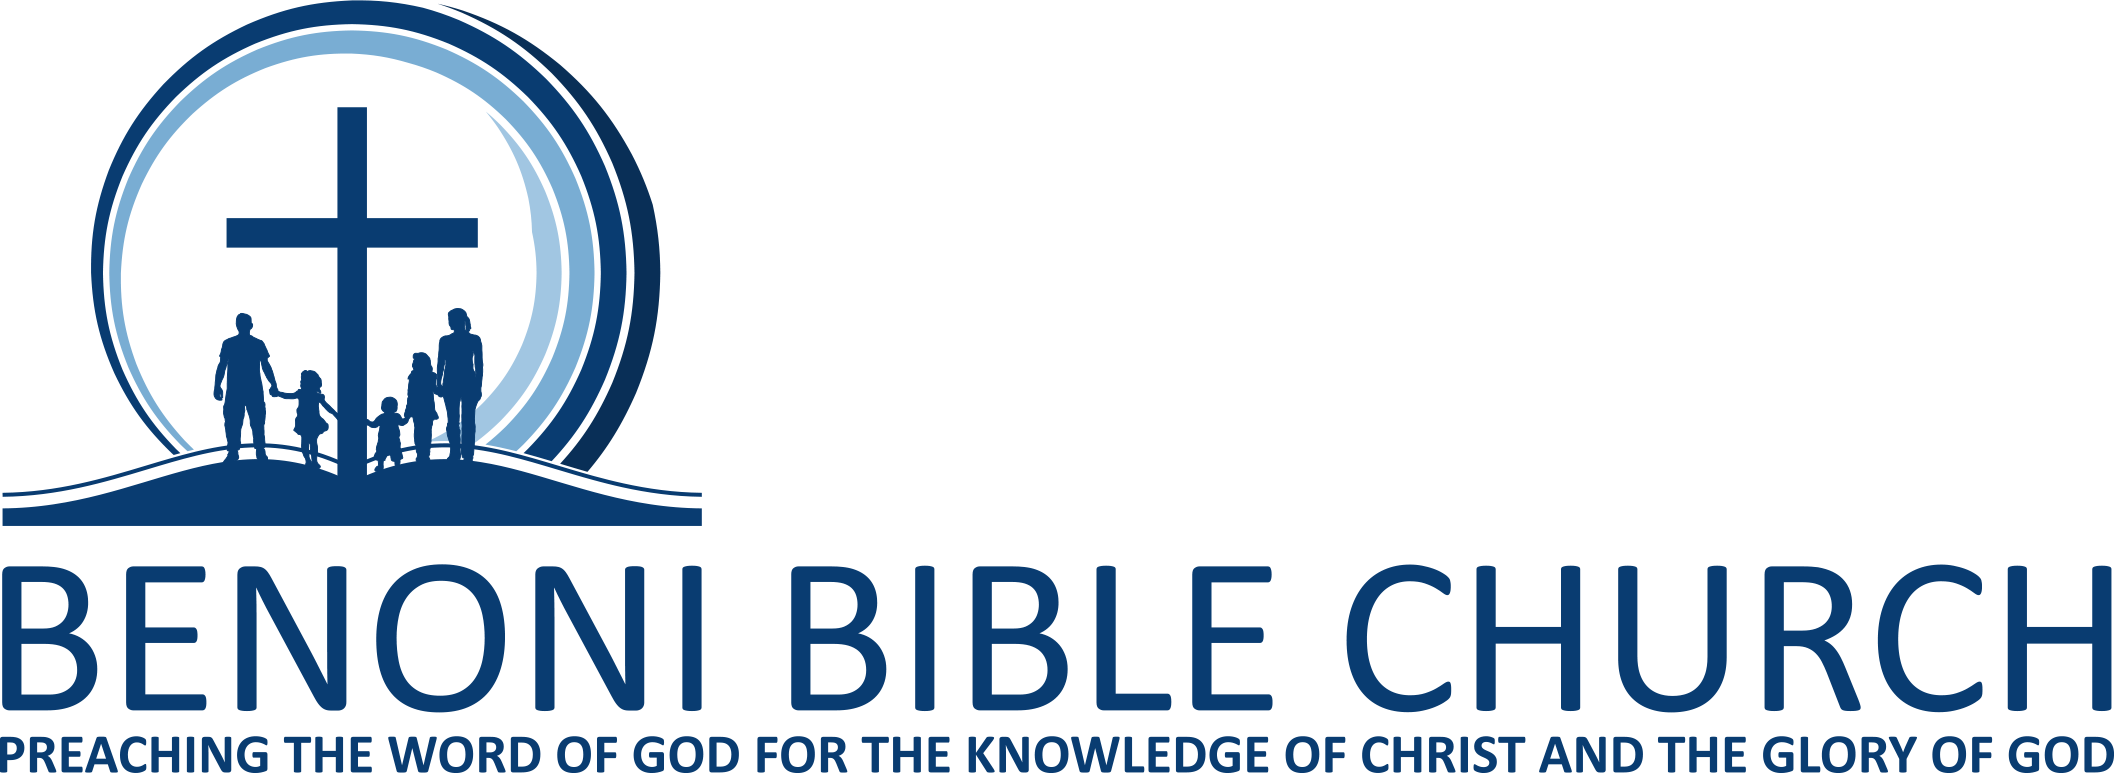 Benoni Bible Church – Benoni Bible Church